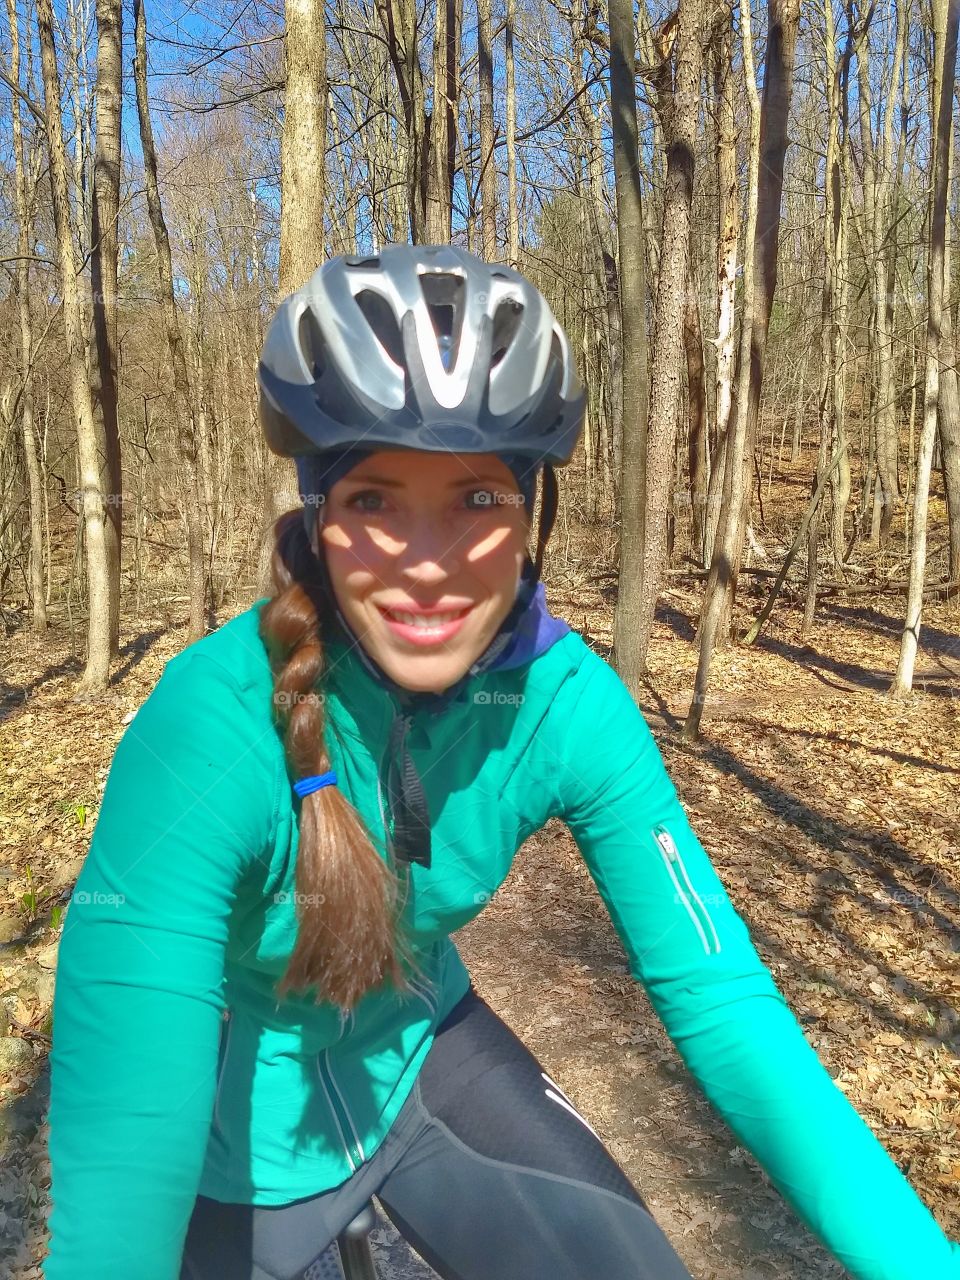 Beautiful woman smiling and bike helmet